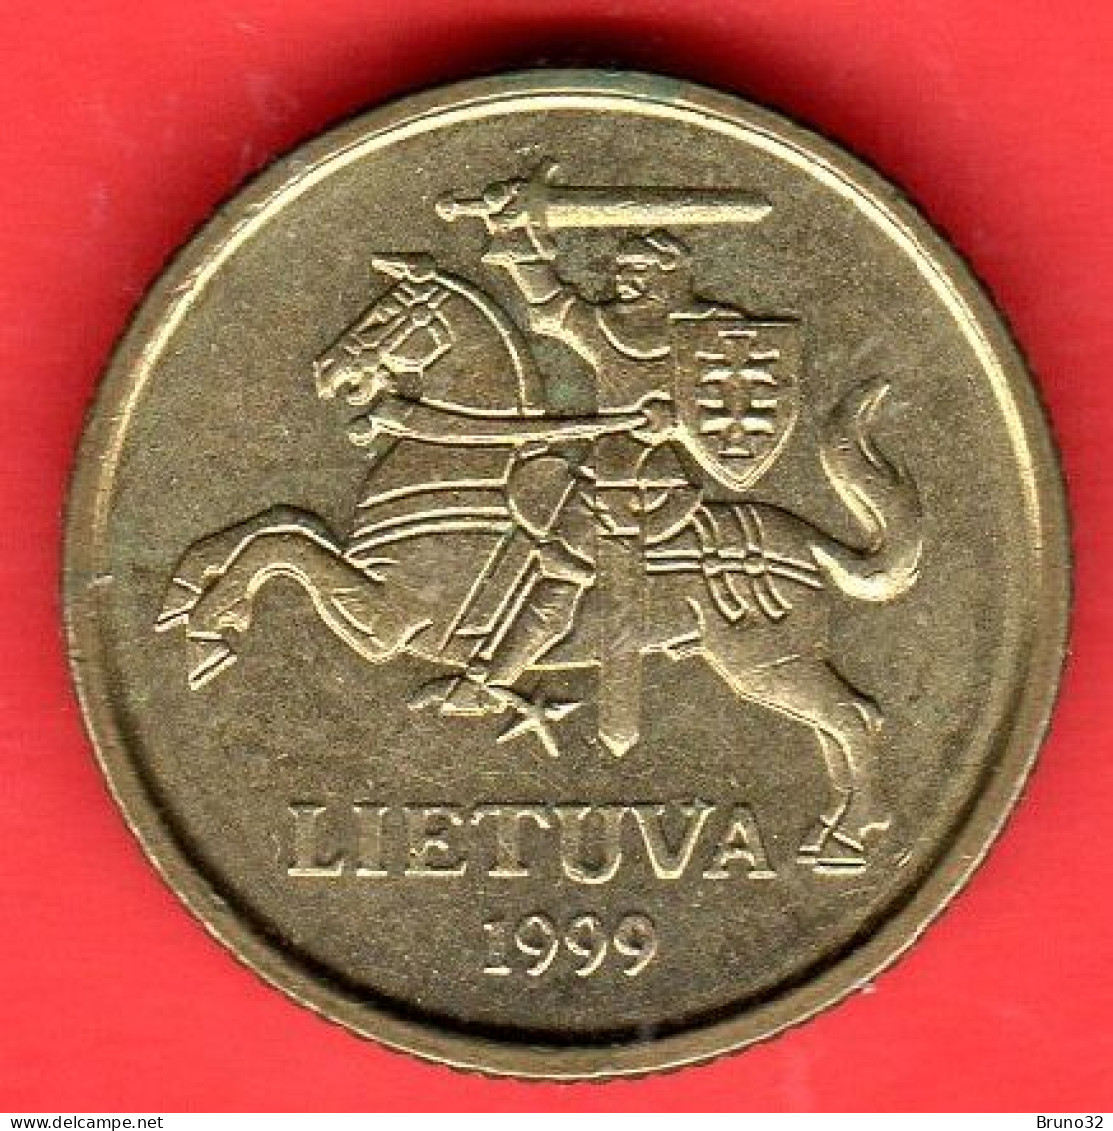 Lituania - Lietuva - Lithuania - 1999 - 10 Centu - QFDC/aUNC - Come Da Foto - Lituanie